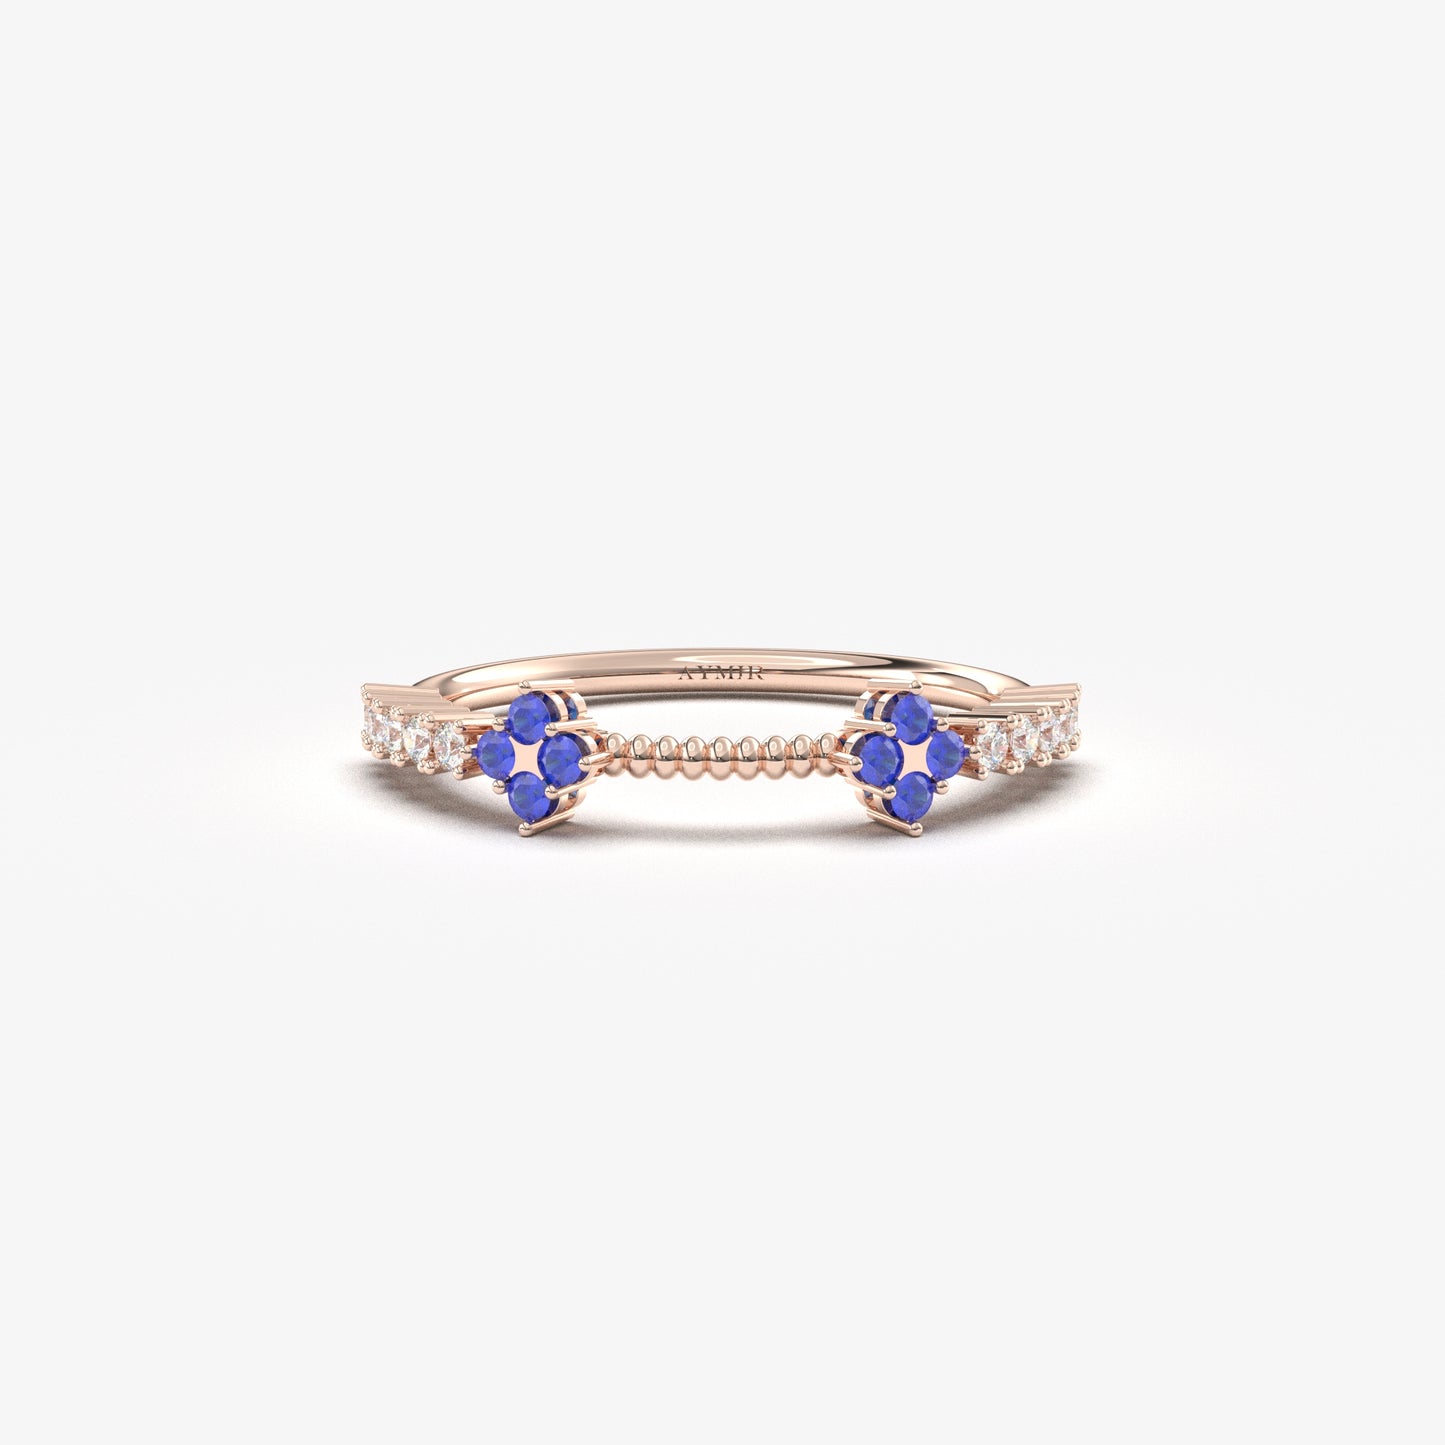 14K Gold Unique Diamond Sapphire Ring - 2S176SAF